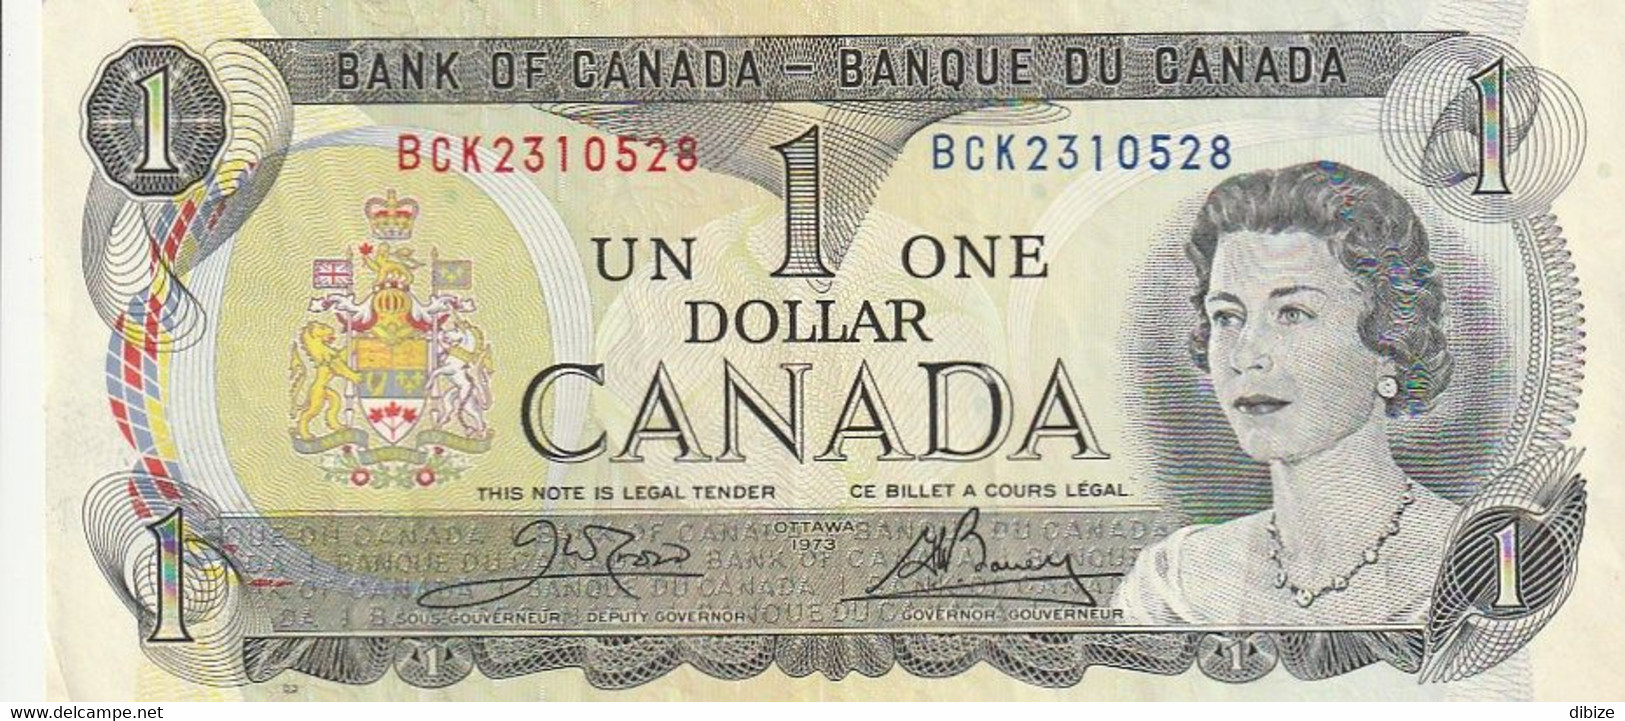 Billet De Banque Usagé. Canada. 1 Dollar. 1973.  Effigie De La Reine D'Angleterre. Etat Moyen. - Canada